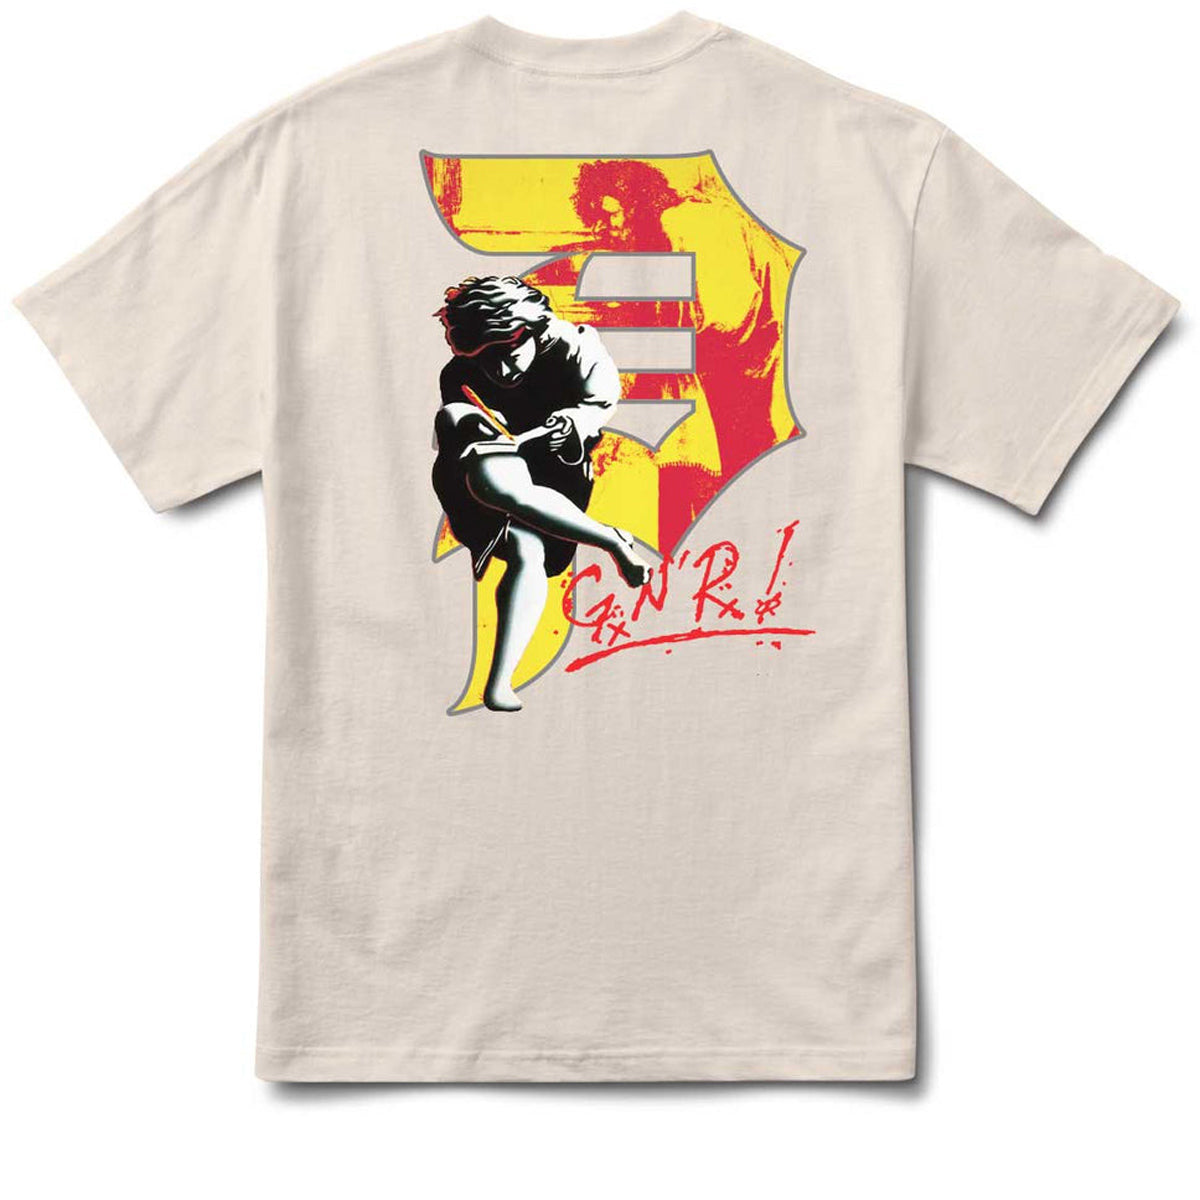 Primitive x Guns N' Roses Illusion Dirty P T-Shirt - Cream image 1